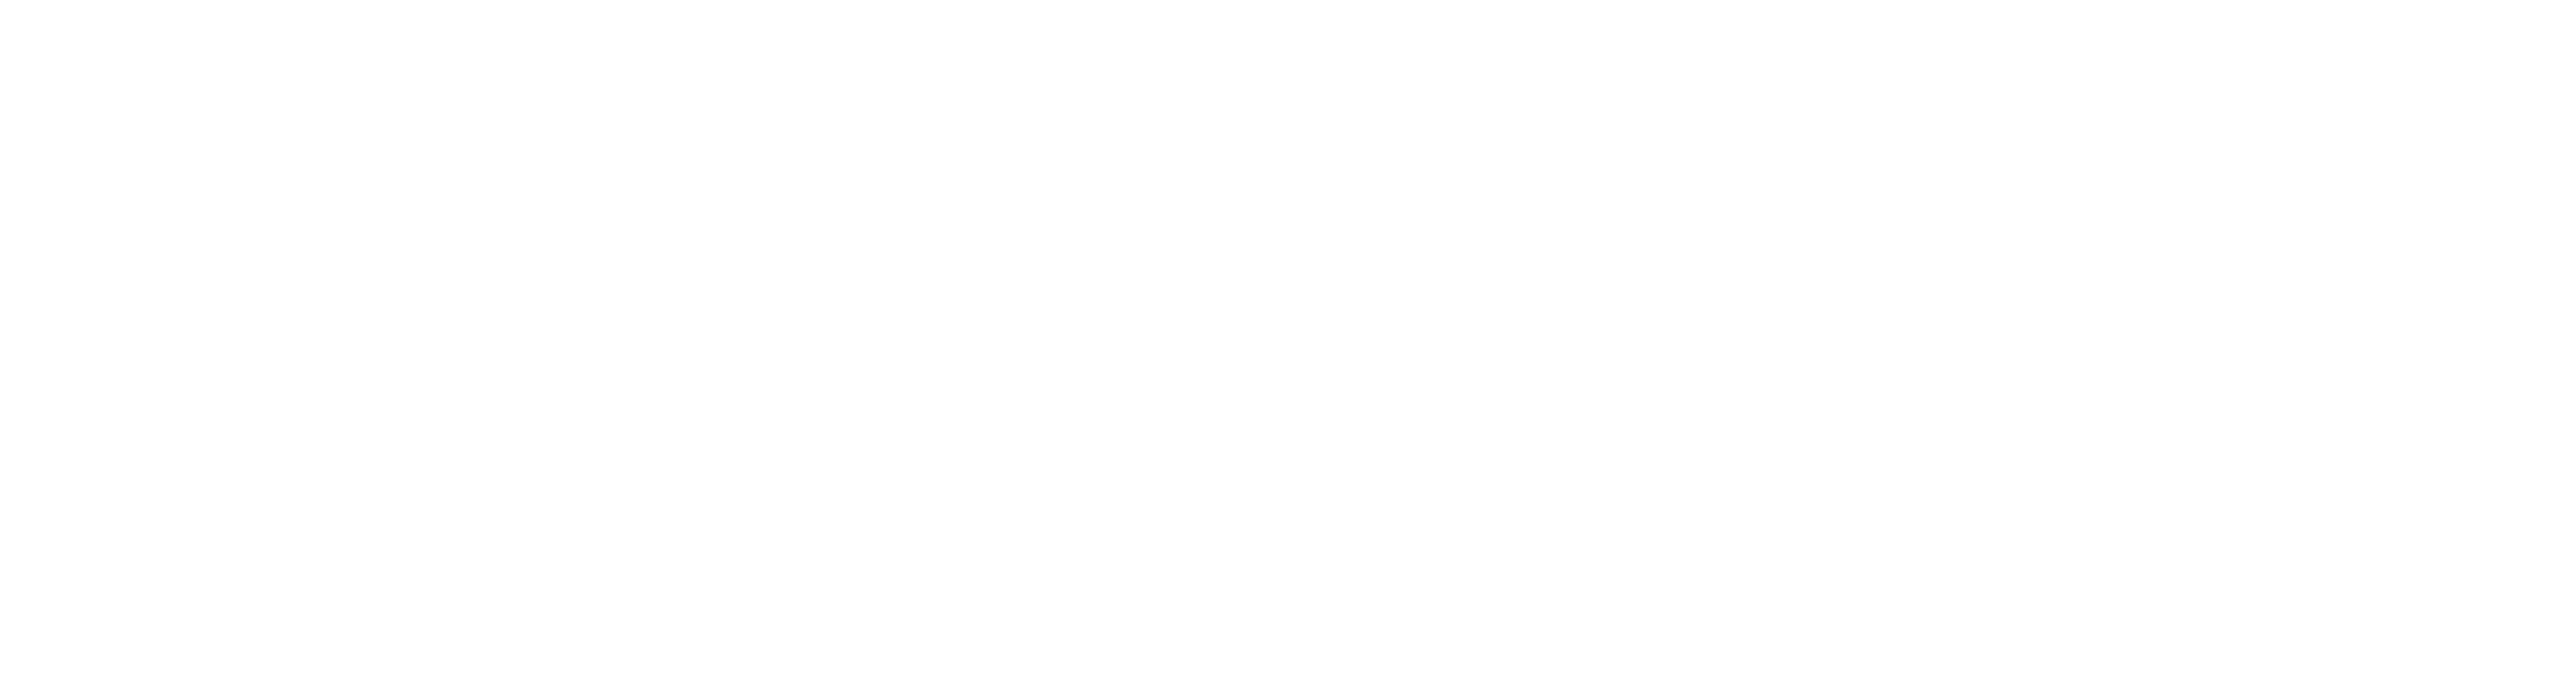 AniCura Dierzorg Kruiningen logo